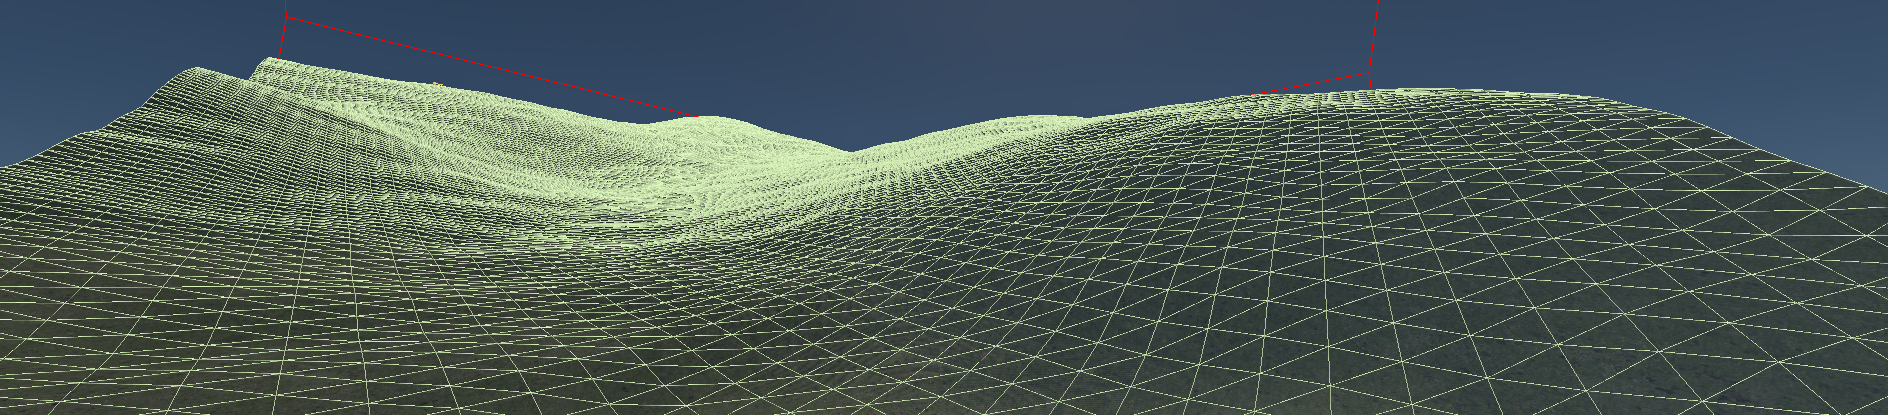 Sample of the Procedural World terrain mesh.